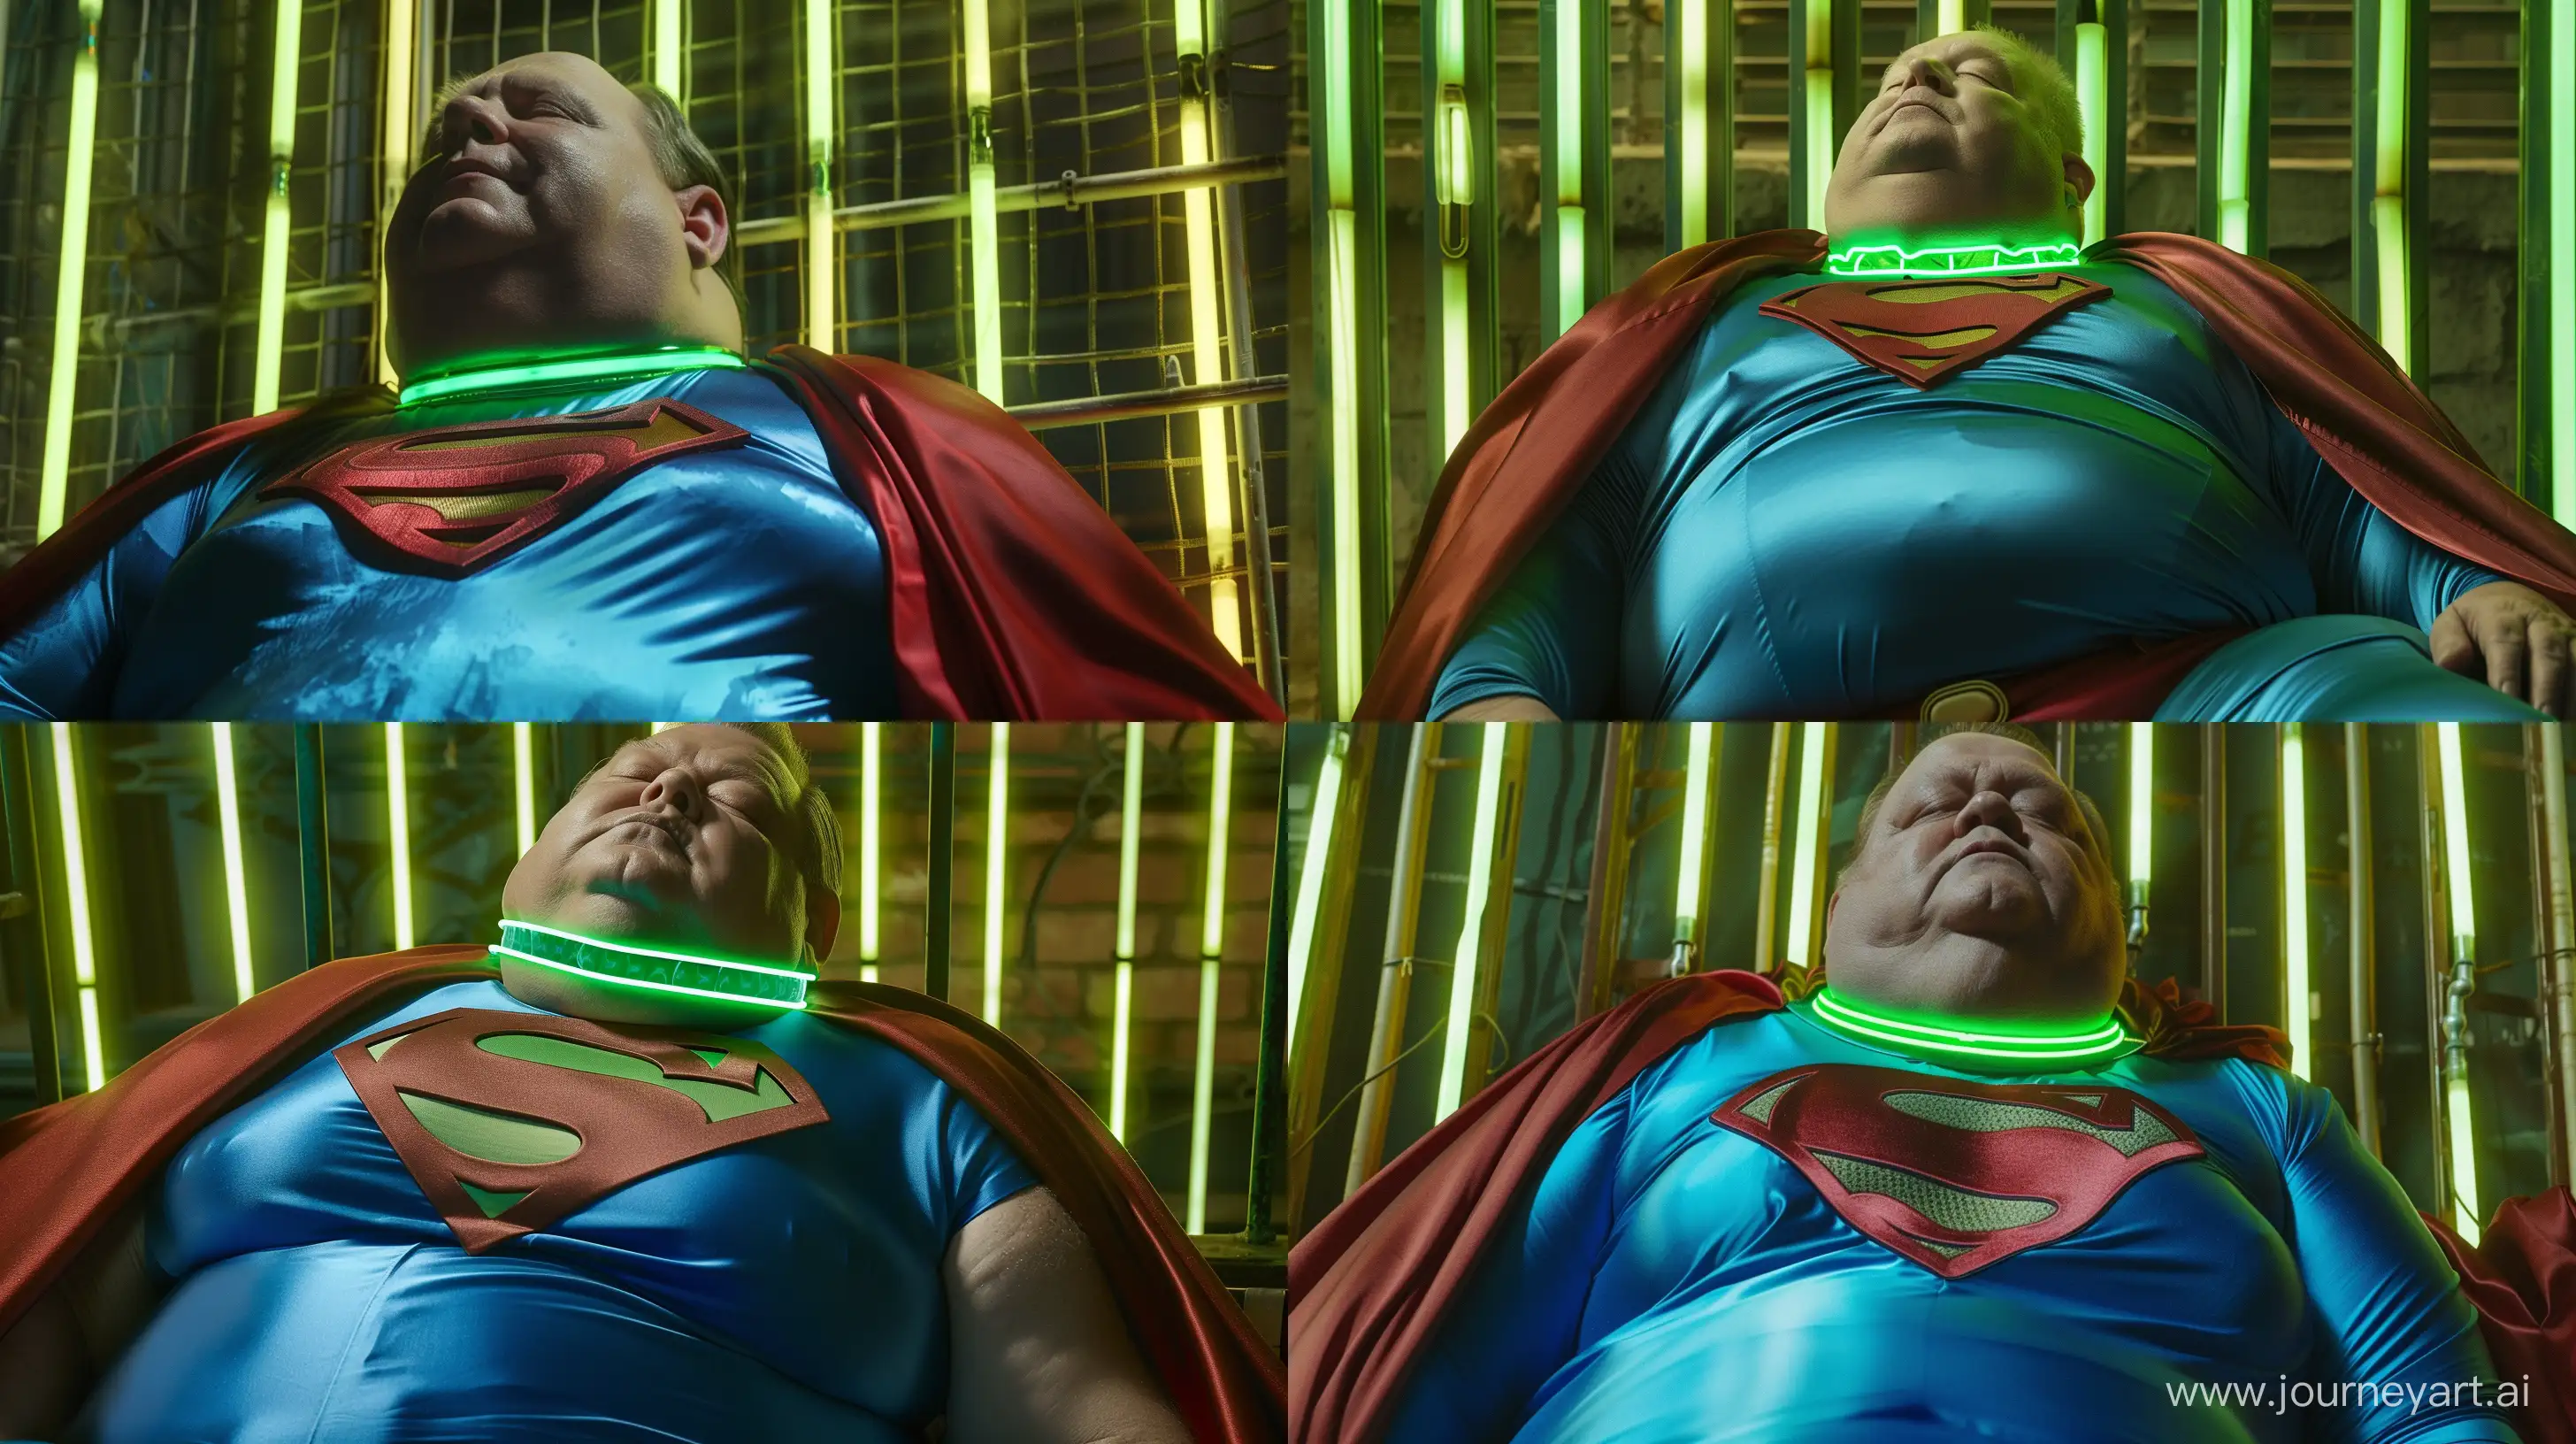 Elderly-Superman-Resting-Against-Glowing-Green-Bars-Outdoors